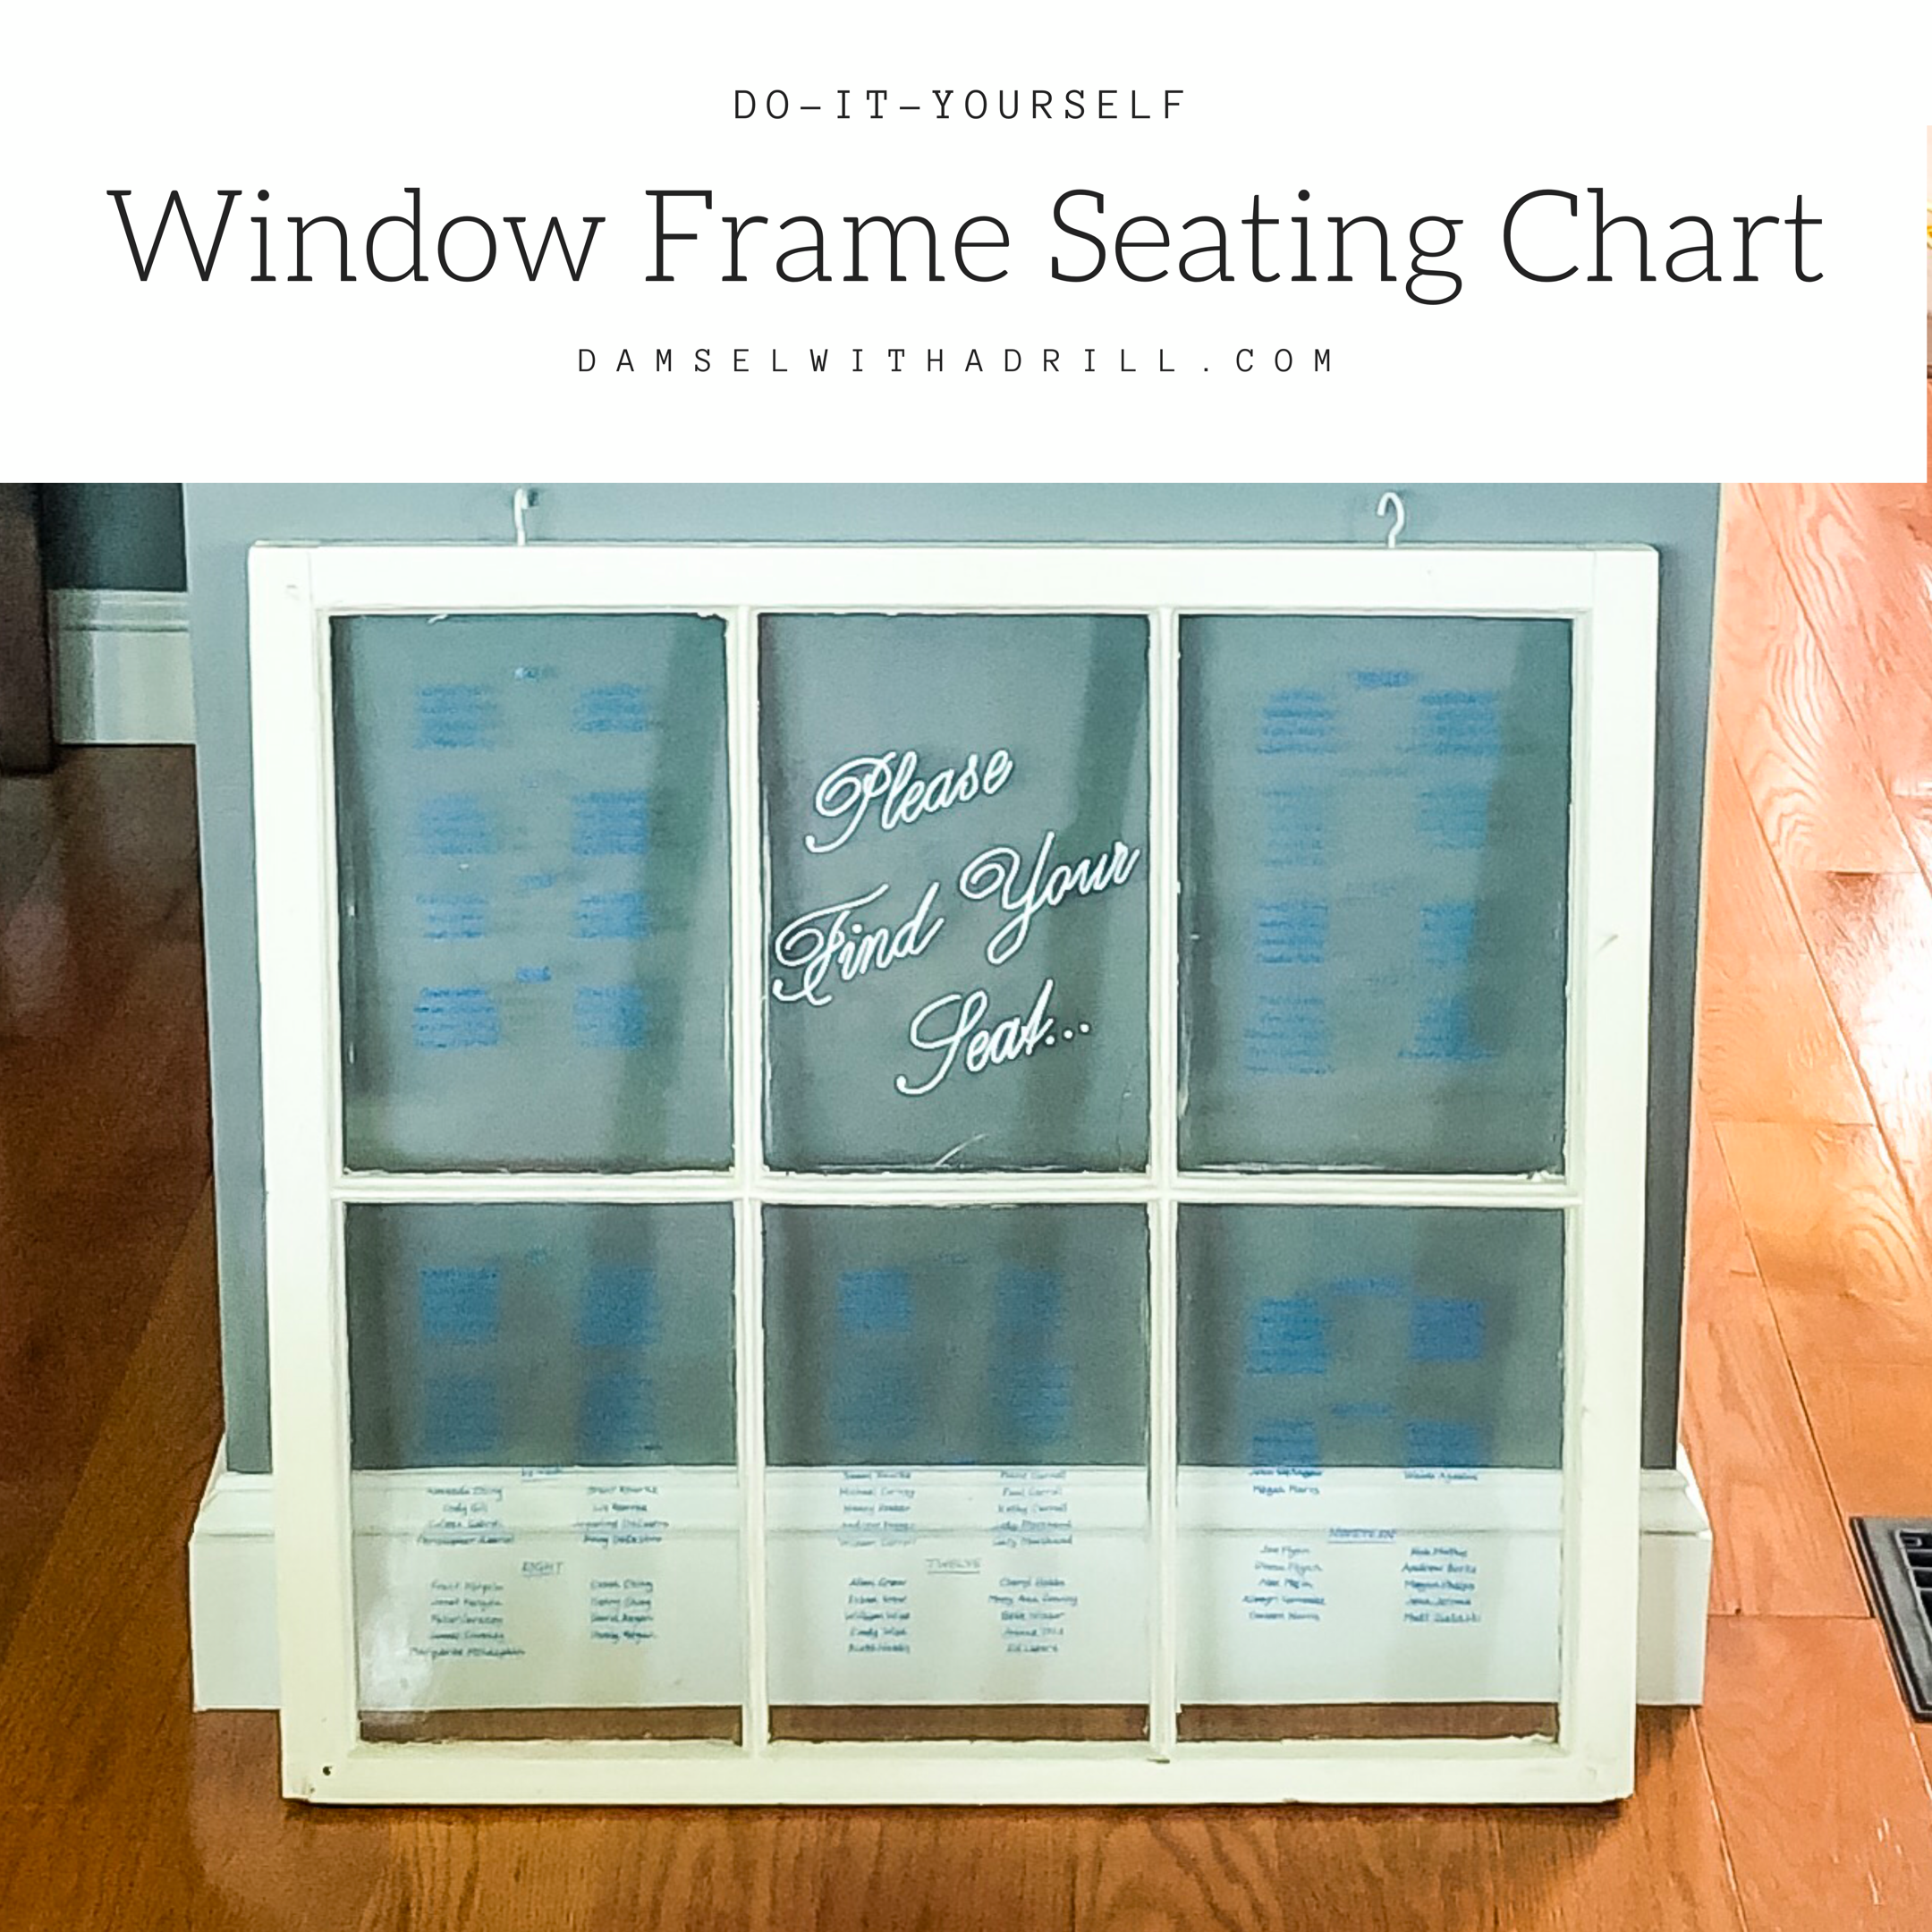 Window Frame Seating Chart